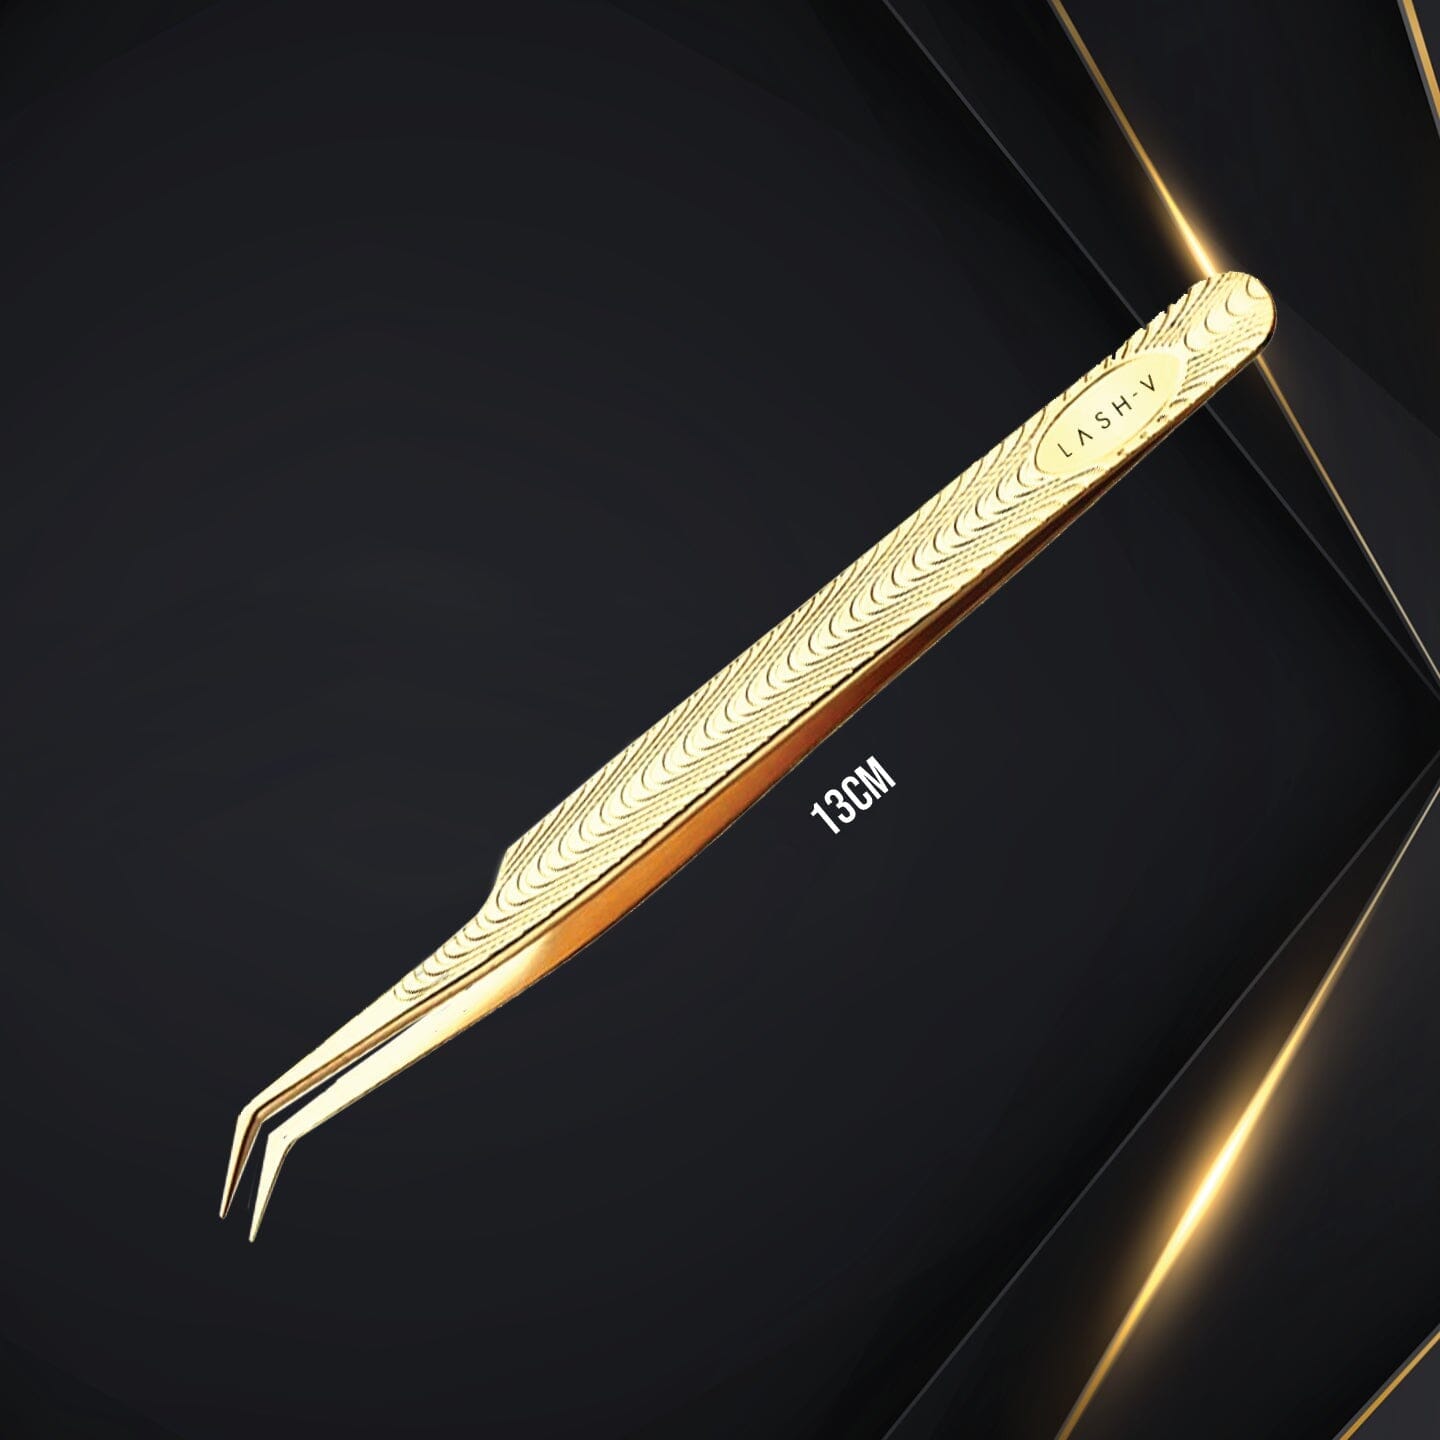 Luxe Gold Tweezers - 45° #3 - One V Salon